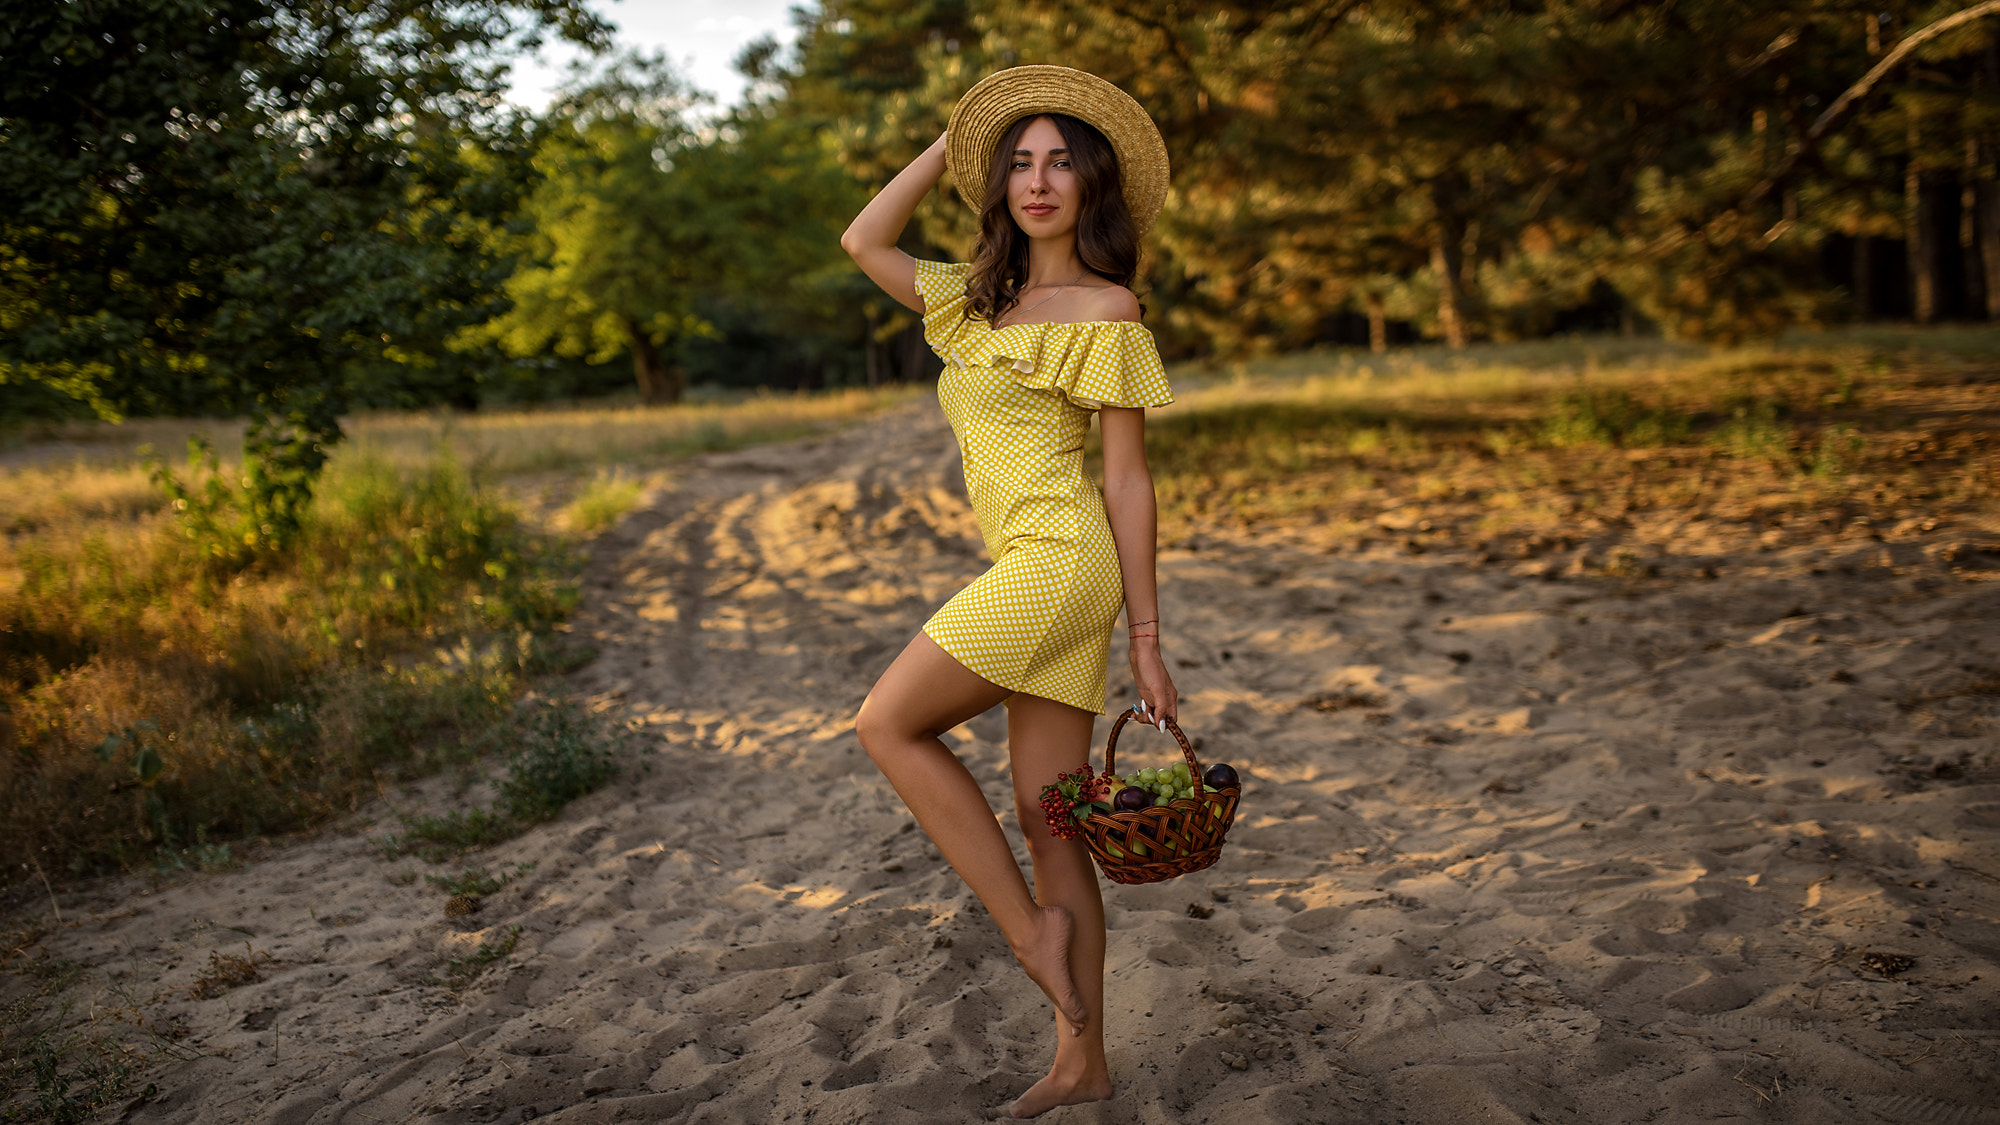 Women Skinny Yellow Dress Women Outdoors Brunette Hat Smiling Fruit Polka Dots Necklace Trees 2000x1125